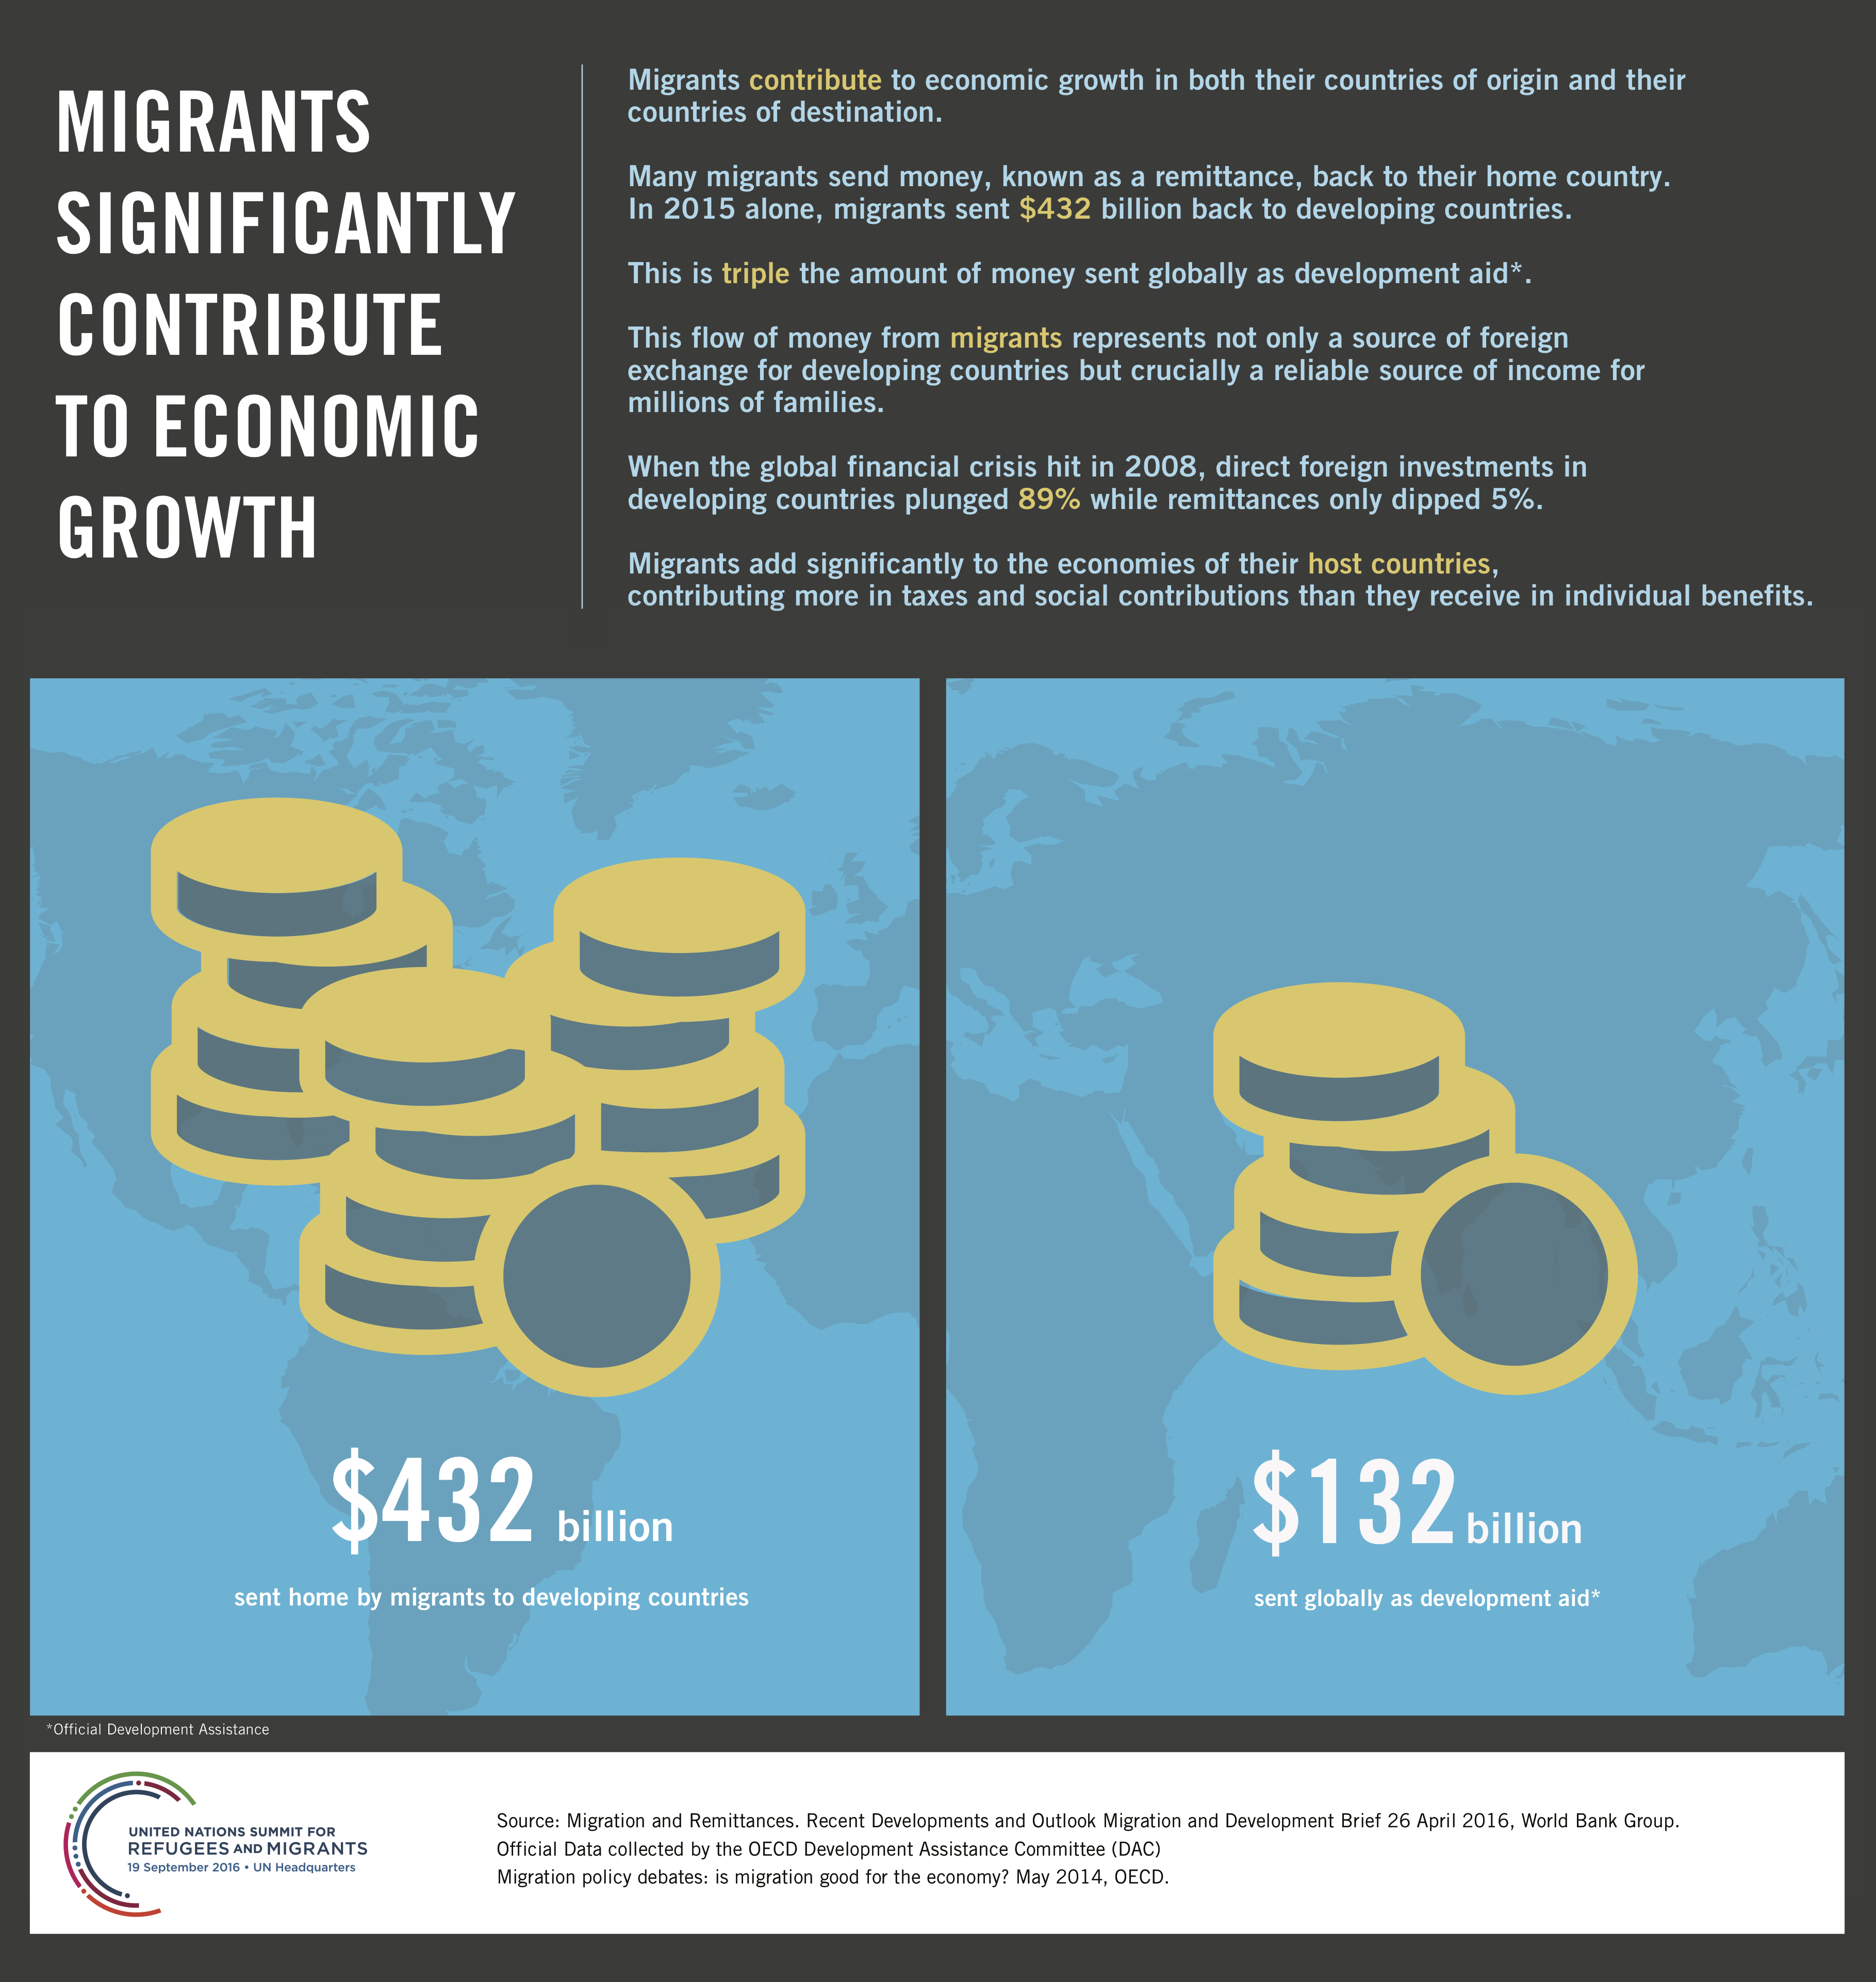 infographic refugee vetting